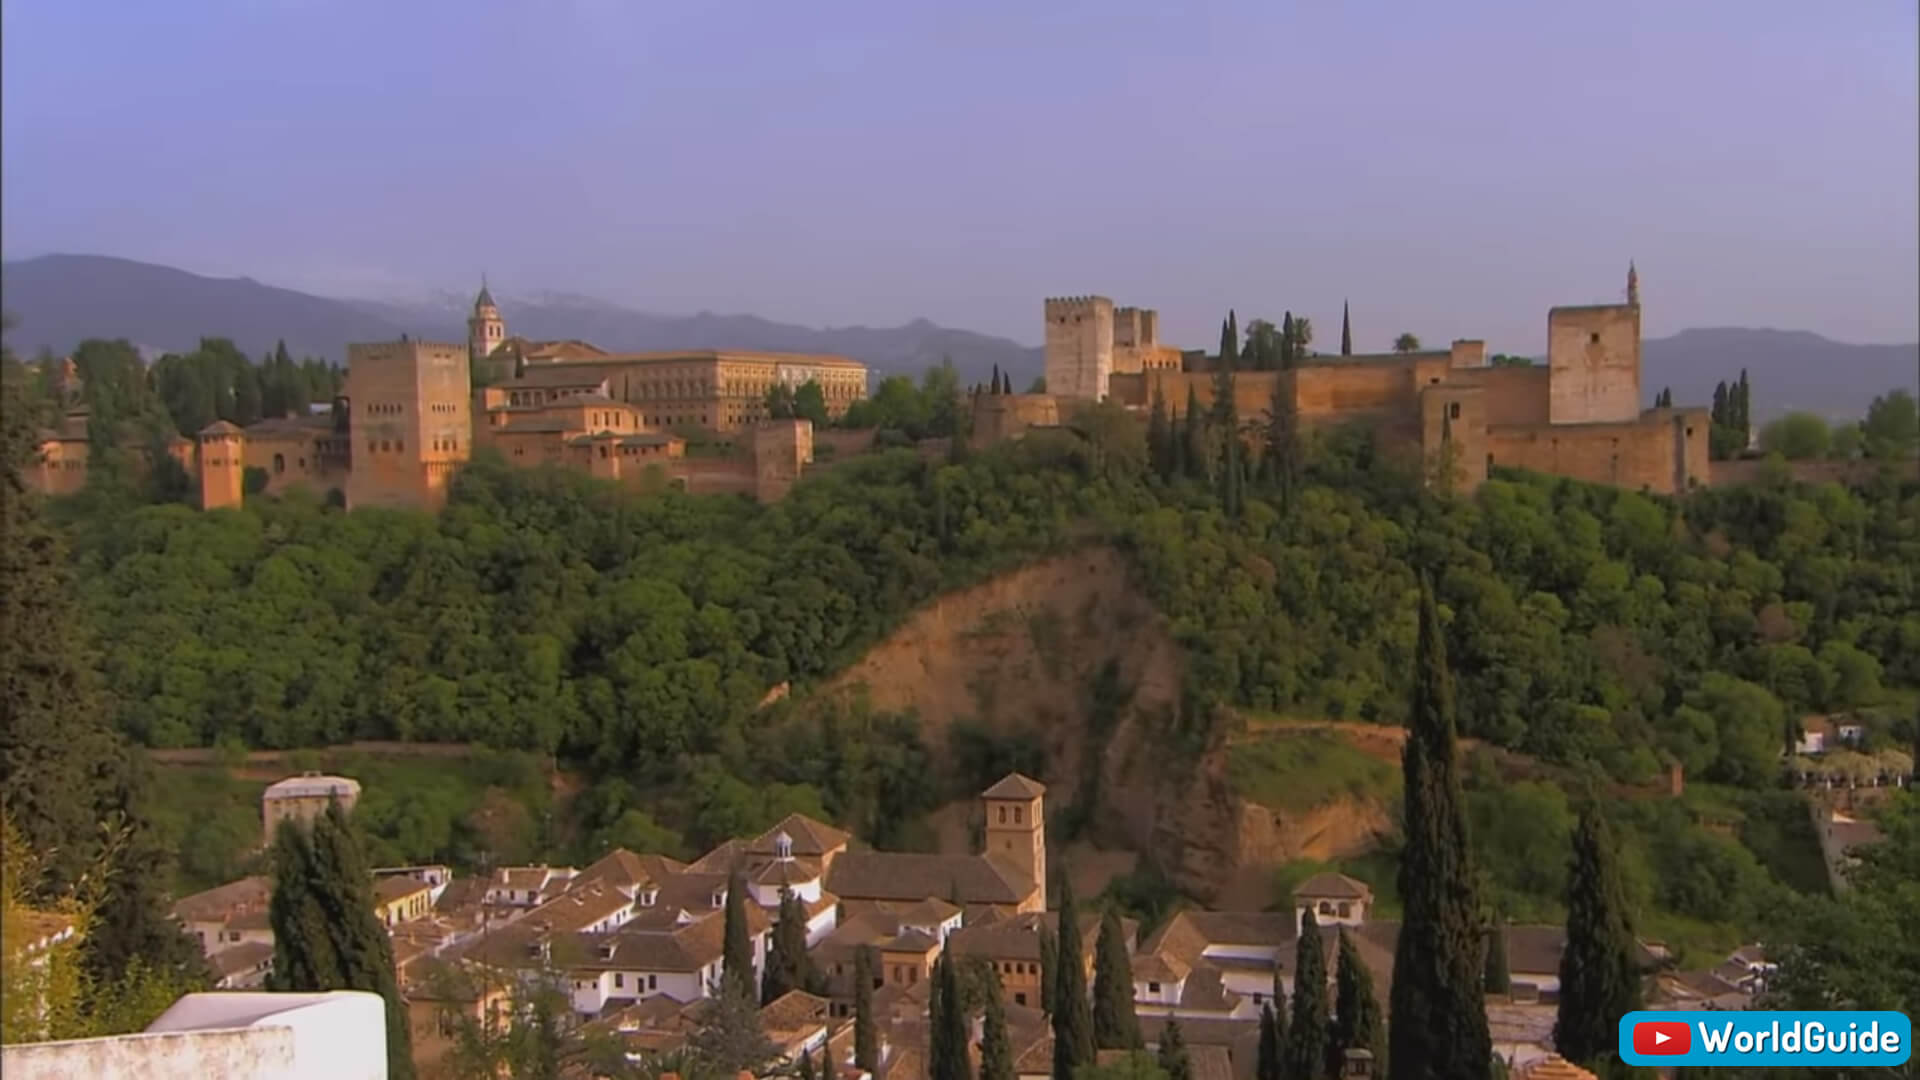 Alhambra Palace Granada